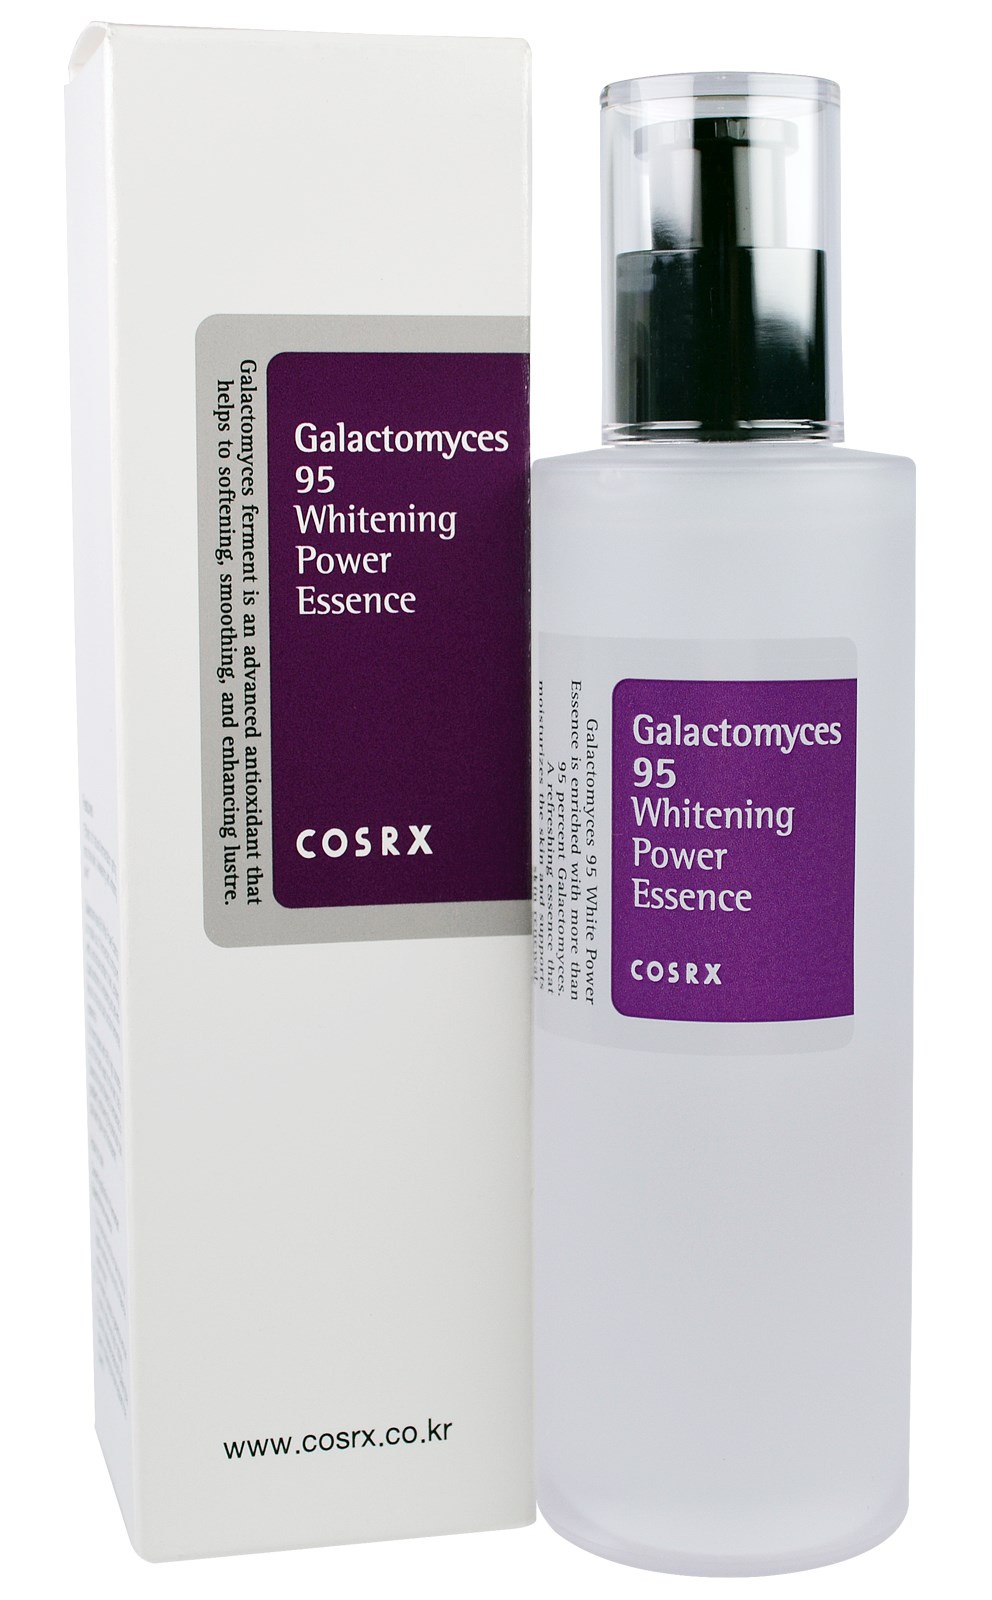 COSRX Galactomyces 95 Whitening Power Essence